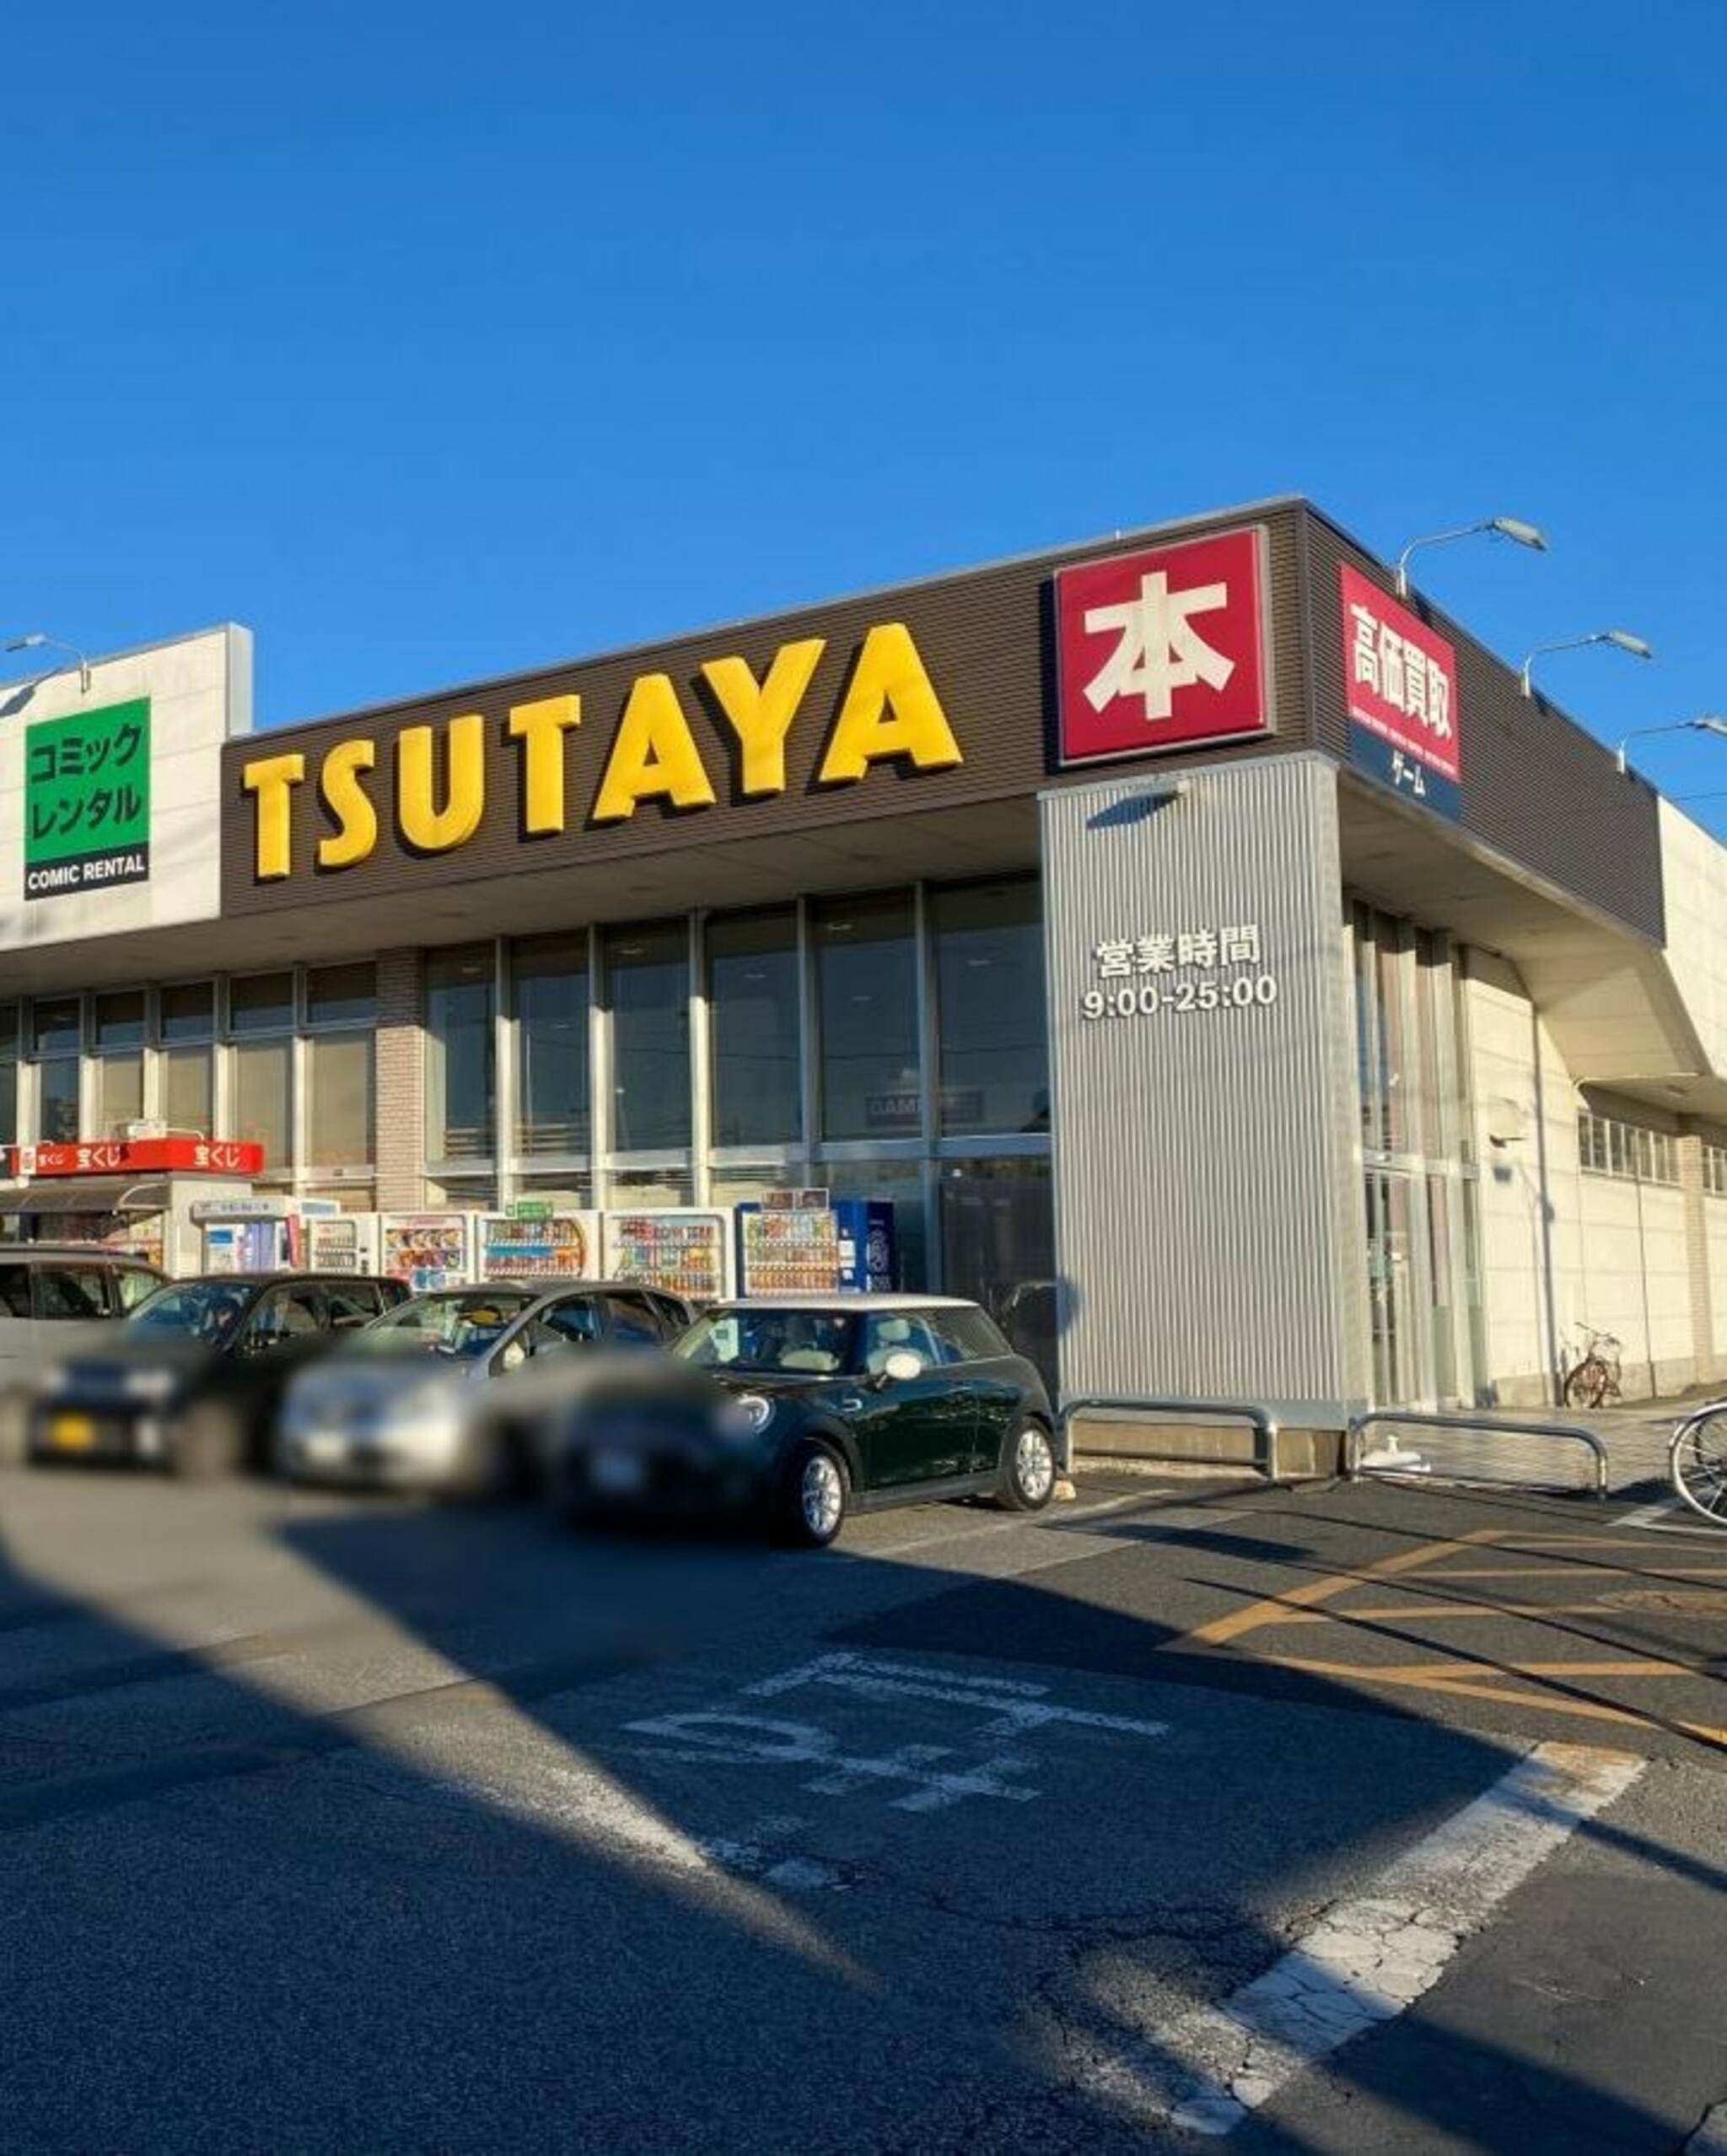 TSUTAYA 春日部16号線店の代表写真1